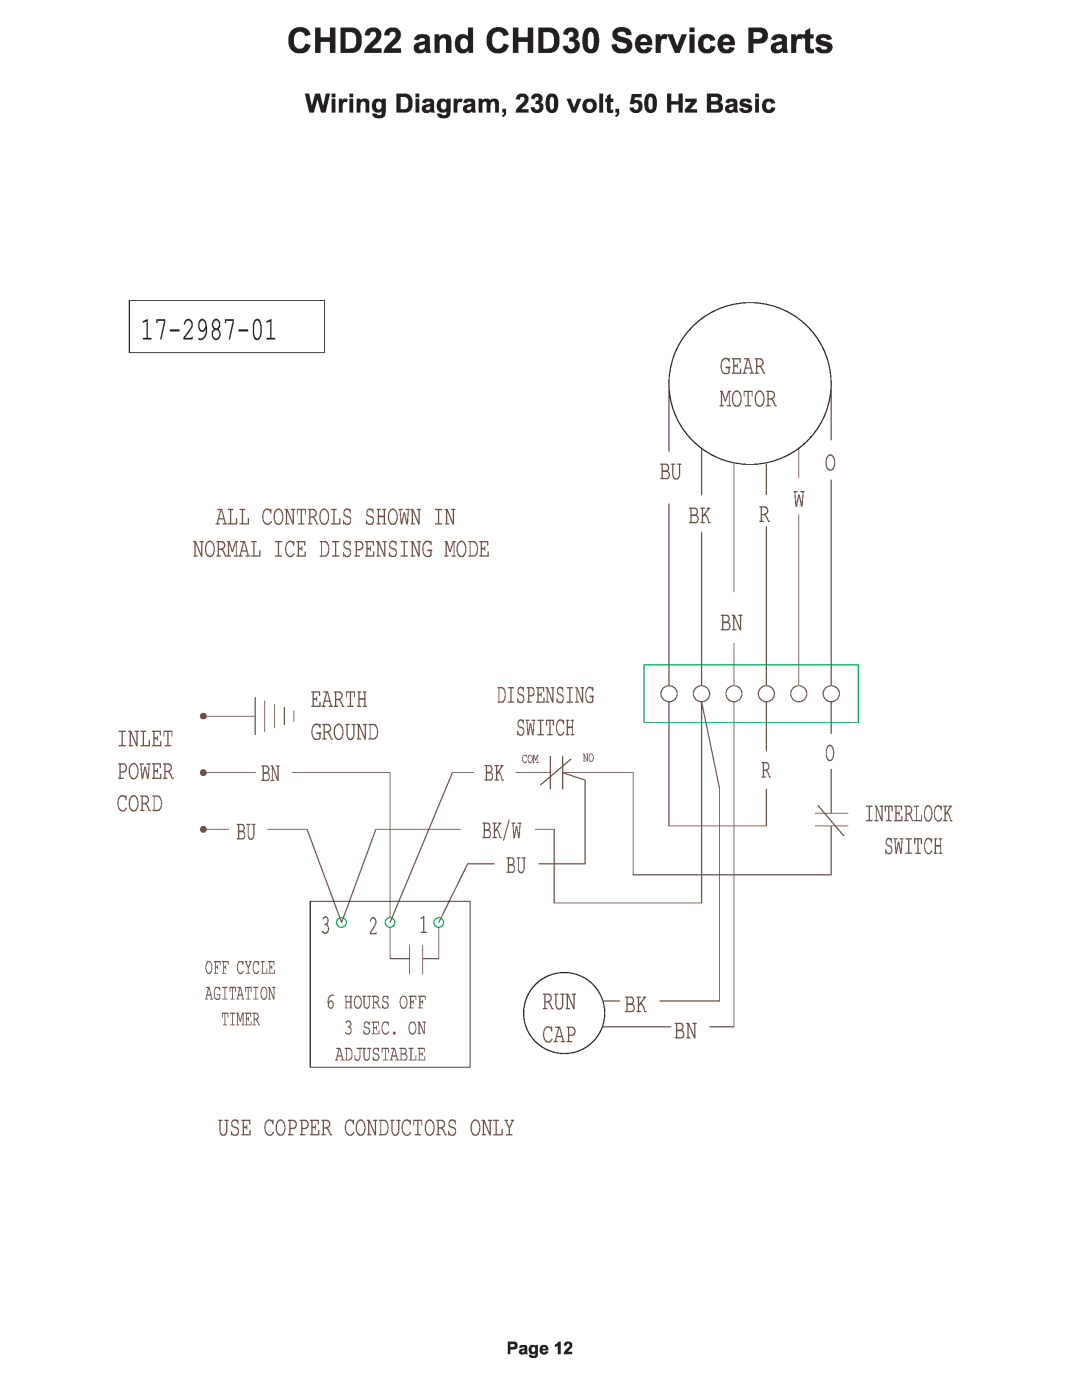 Cornelius manual 17-2987-01, CHD22 and CHD30 Service Parts, Wiring Diagram, 230 volt, 50 Hz Basic 